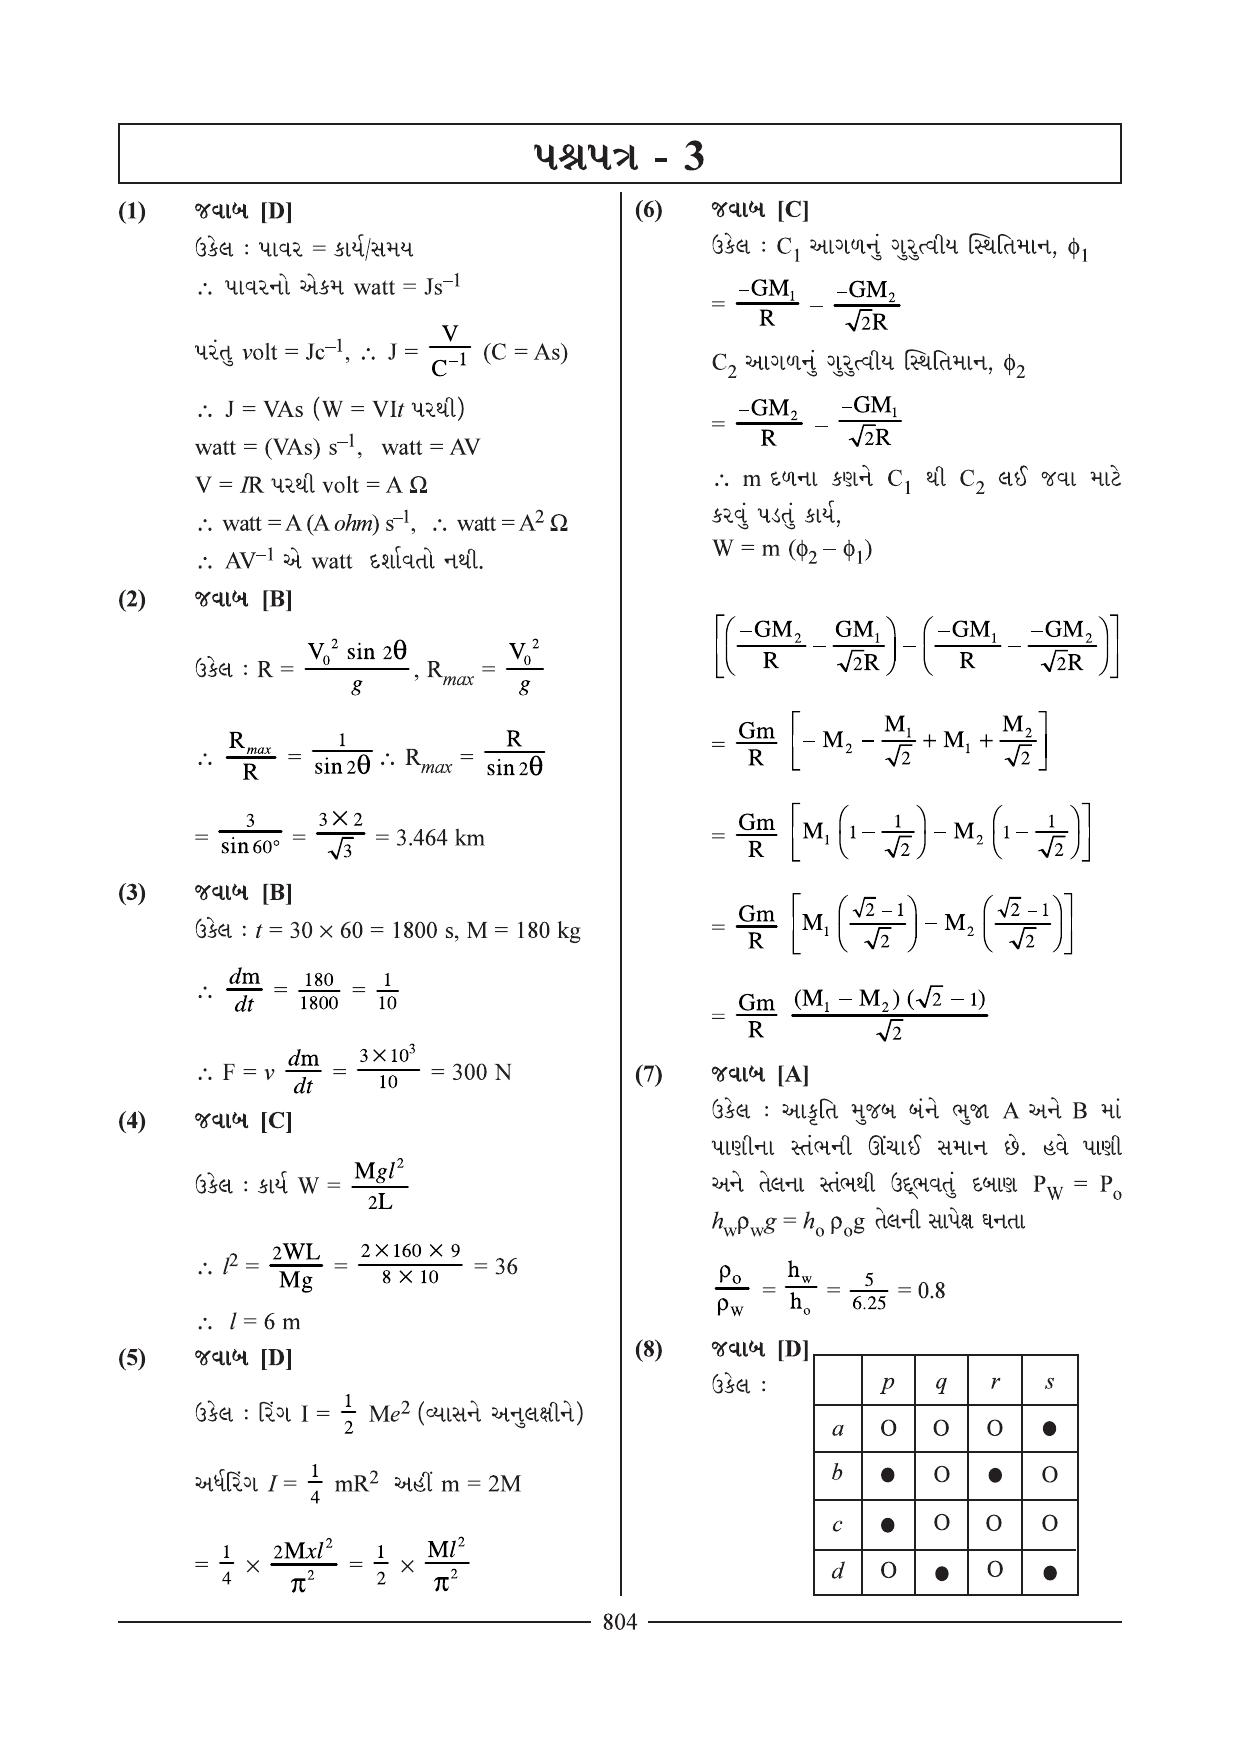 GSEB HSC Physics Question Paper 18-19 (Gujarati Medium) - Page 1